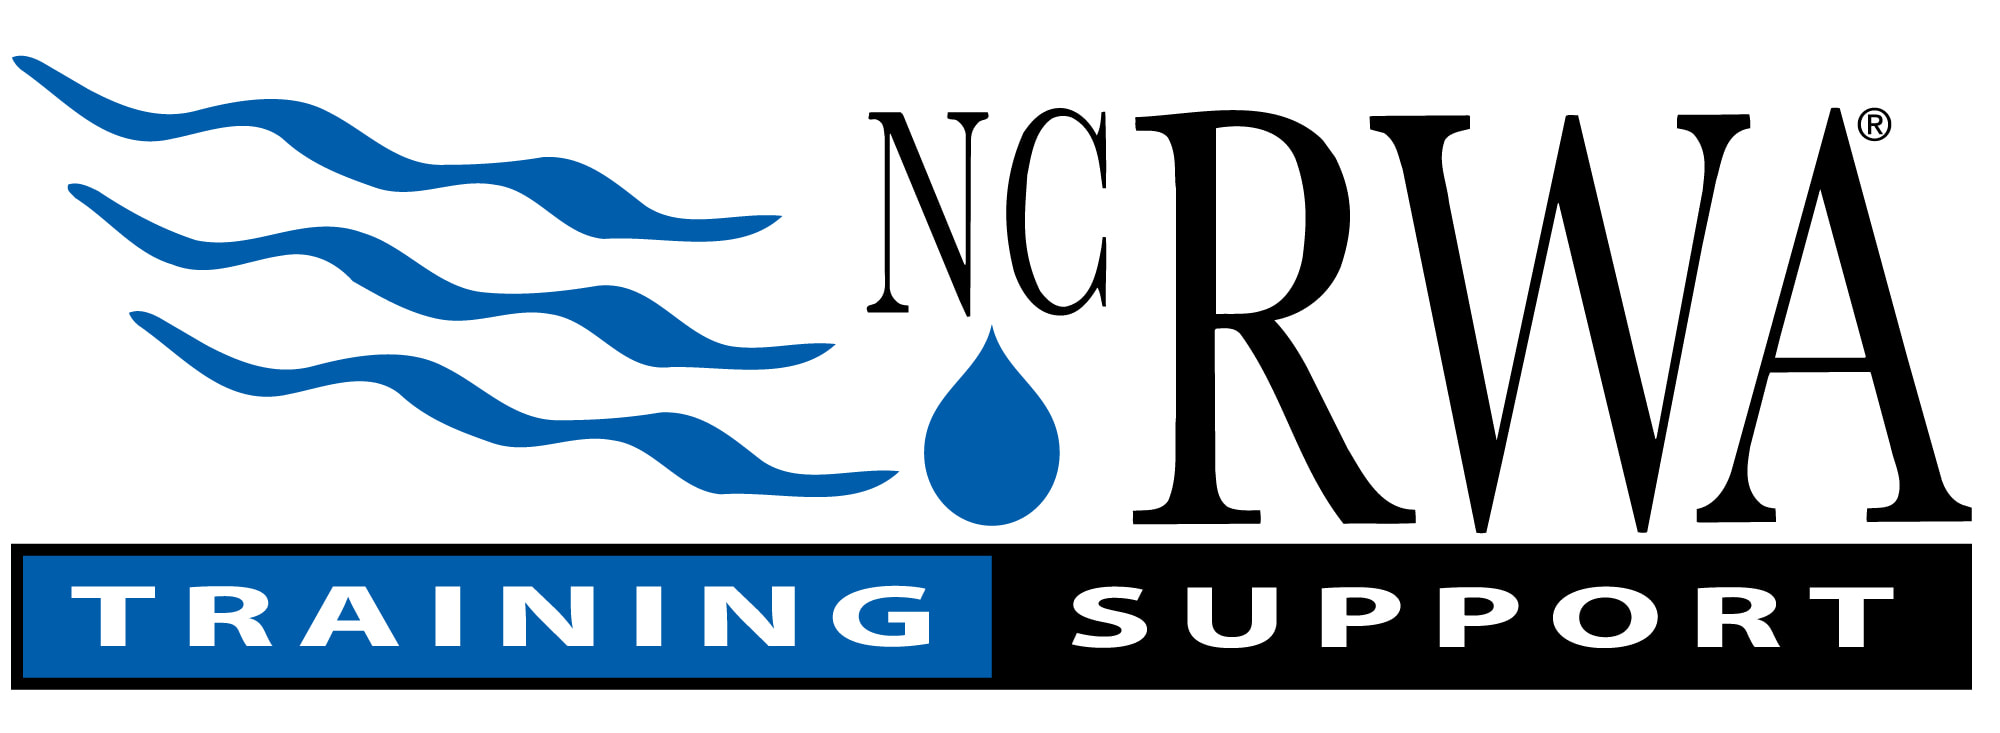 ncrwa-logo-new_orig